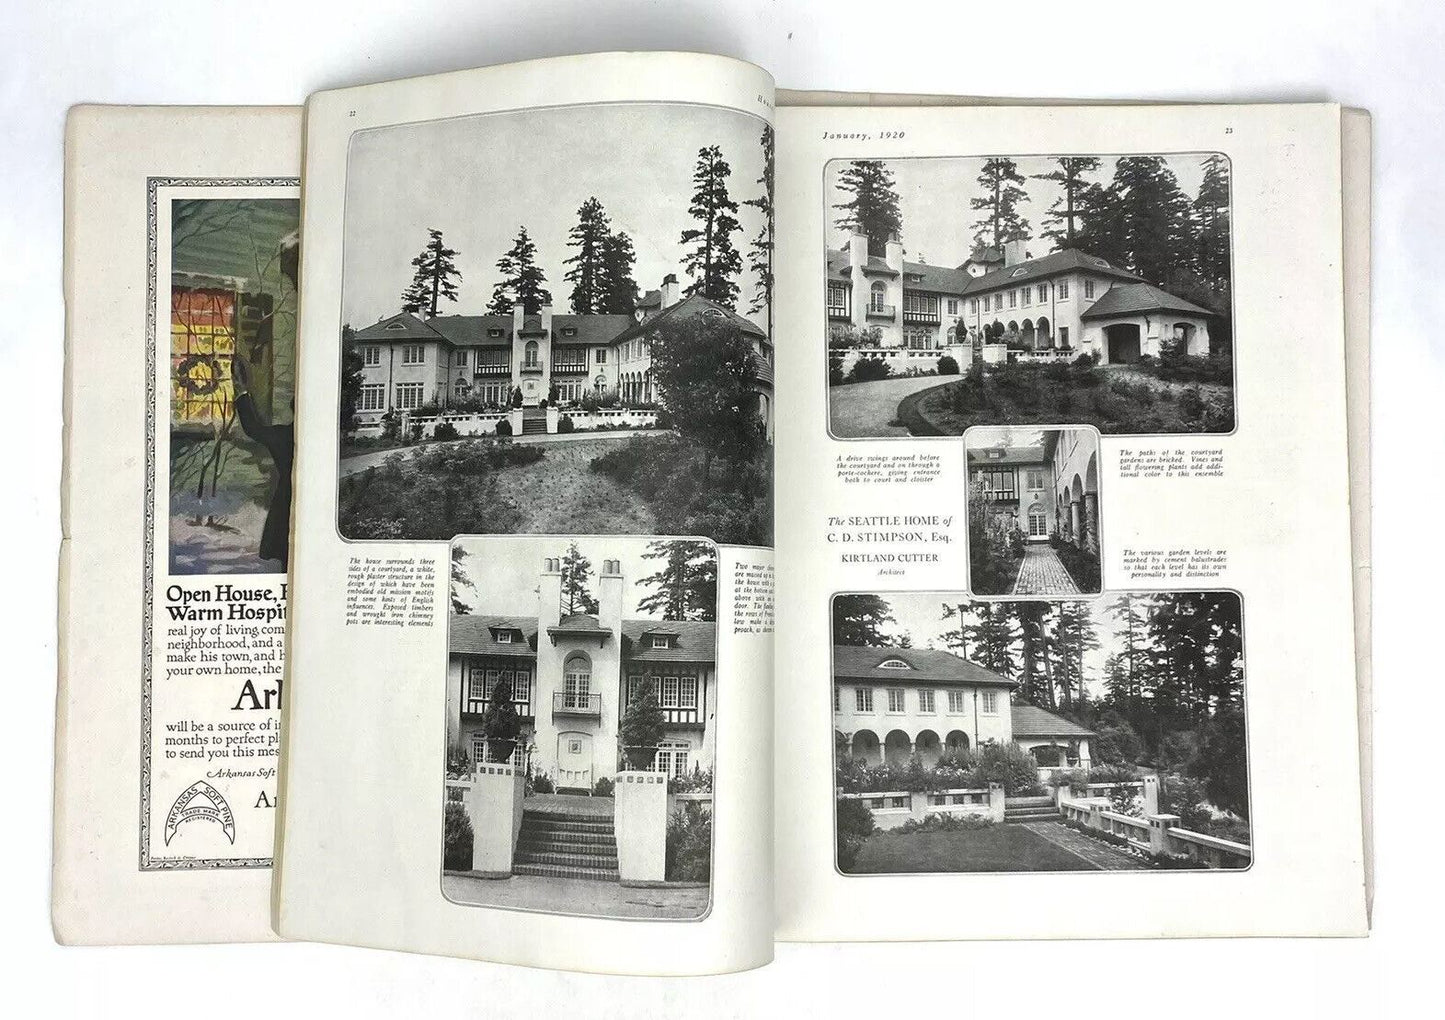 HOUSE & GARDEN January 1920 FURNITURE NUMBER Art Deco Antique Magazine G Brandt